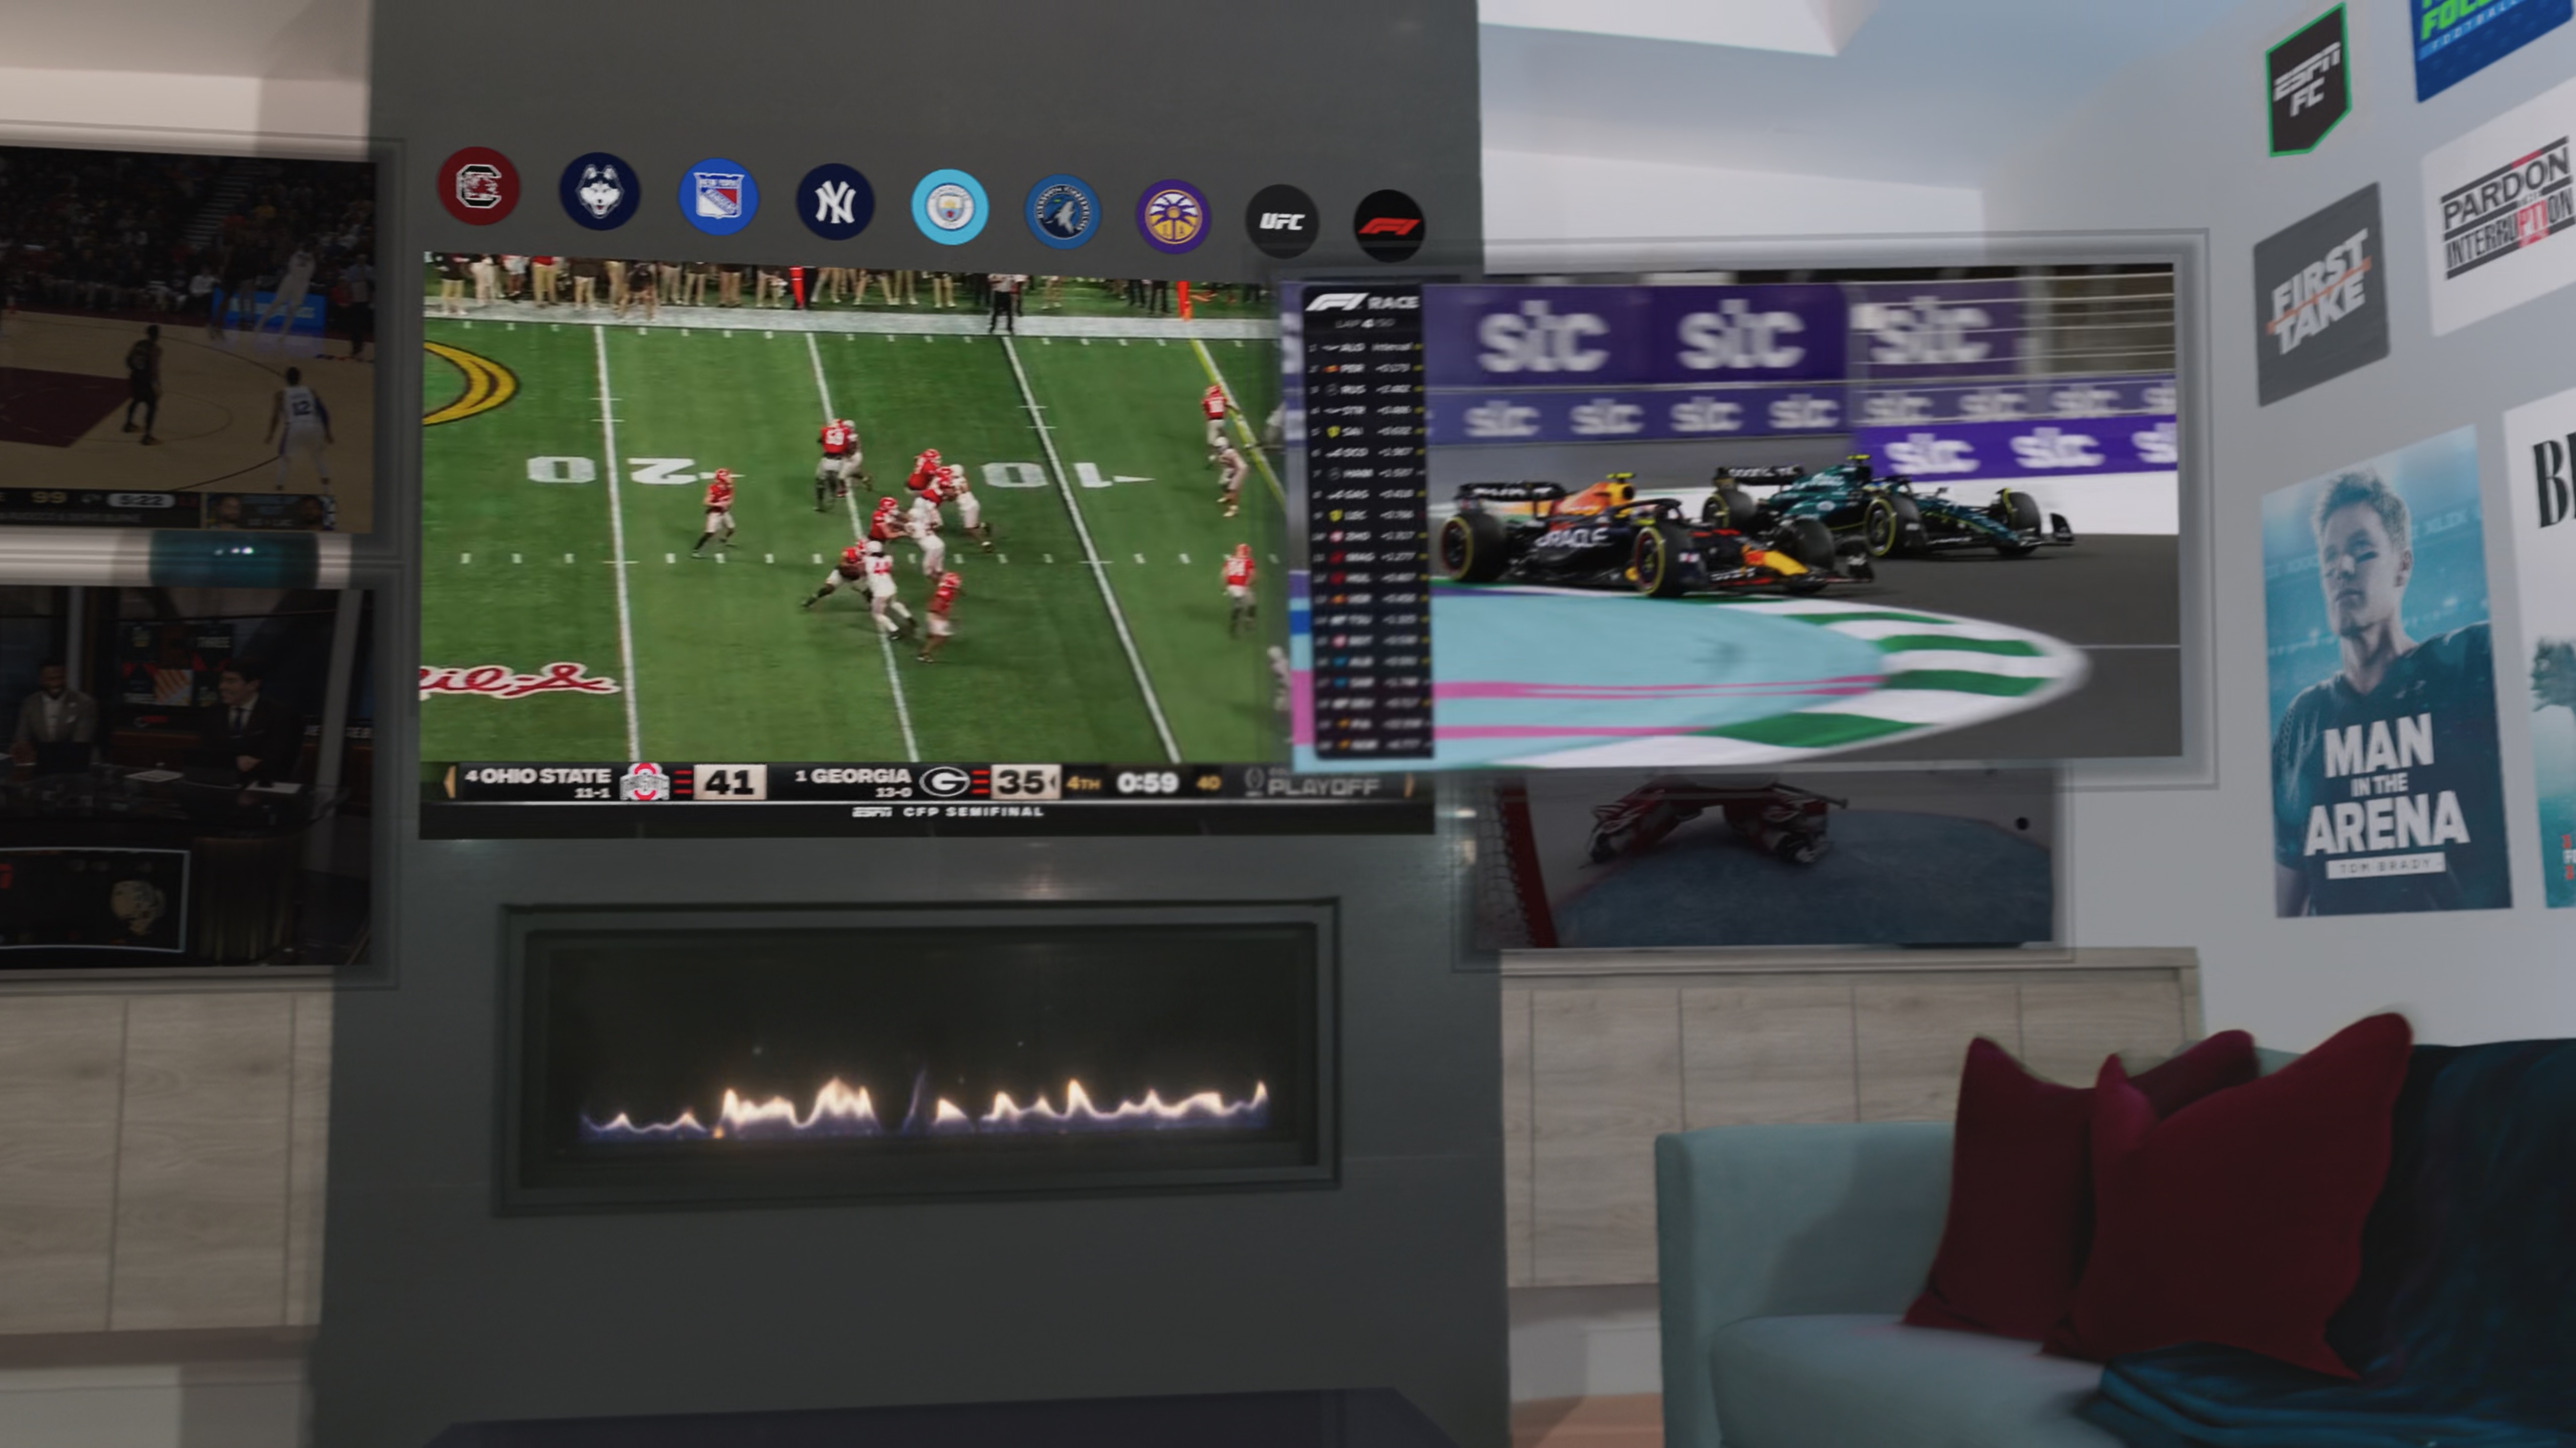 How the Vision Pro may display sports games virtually.